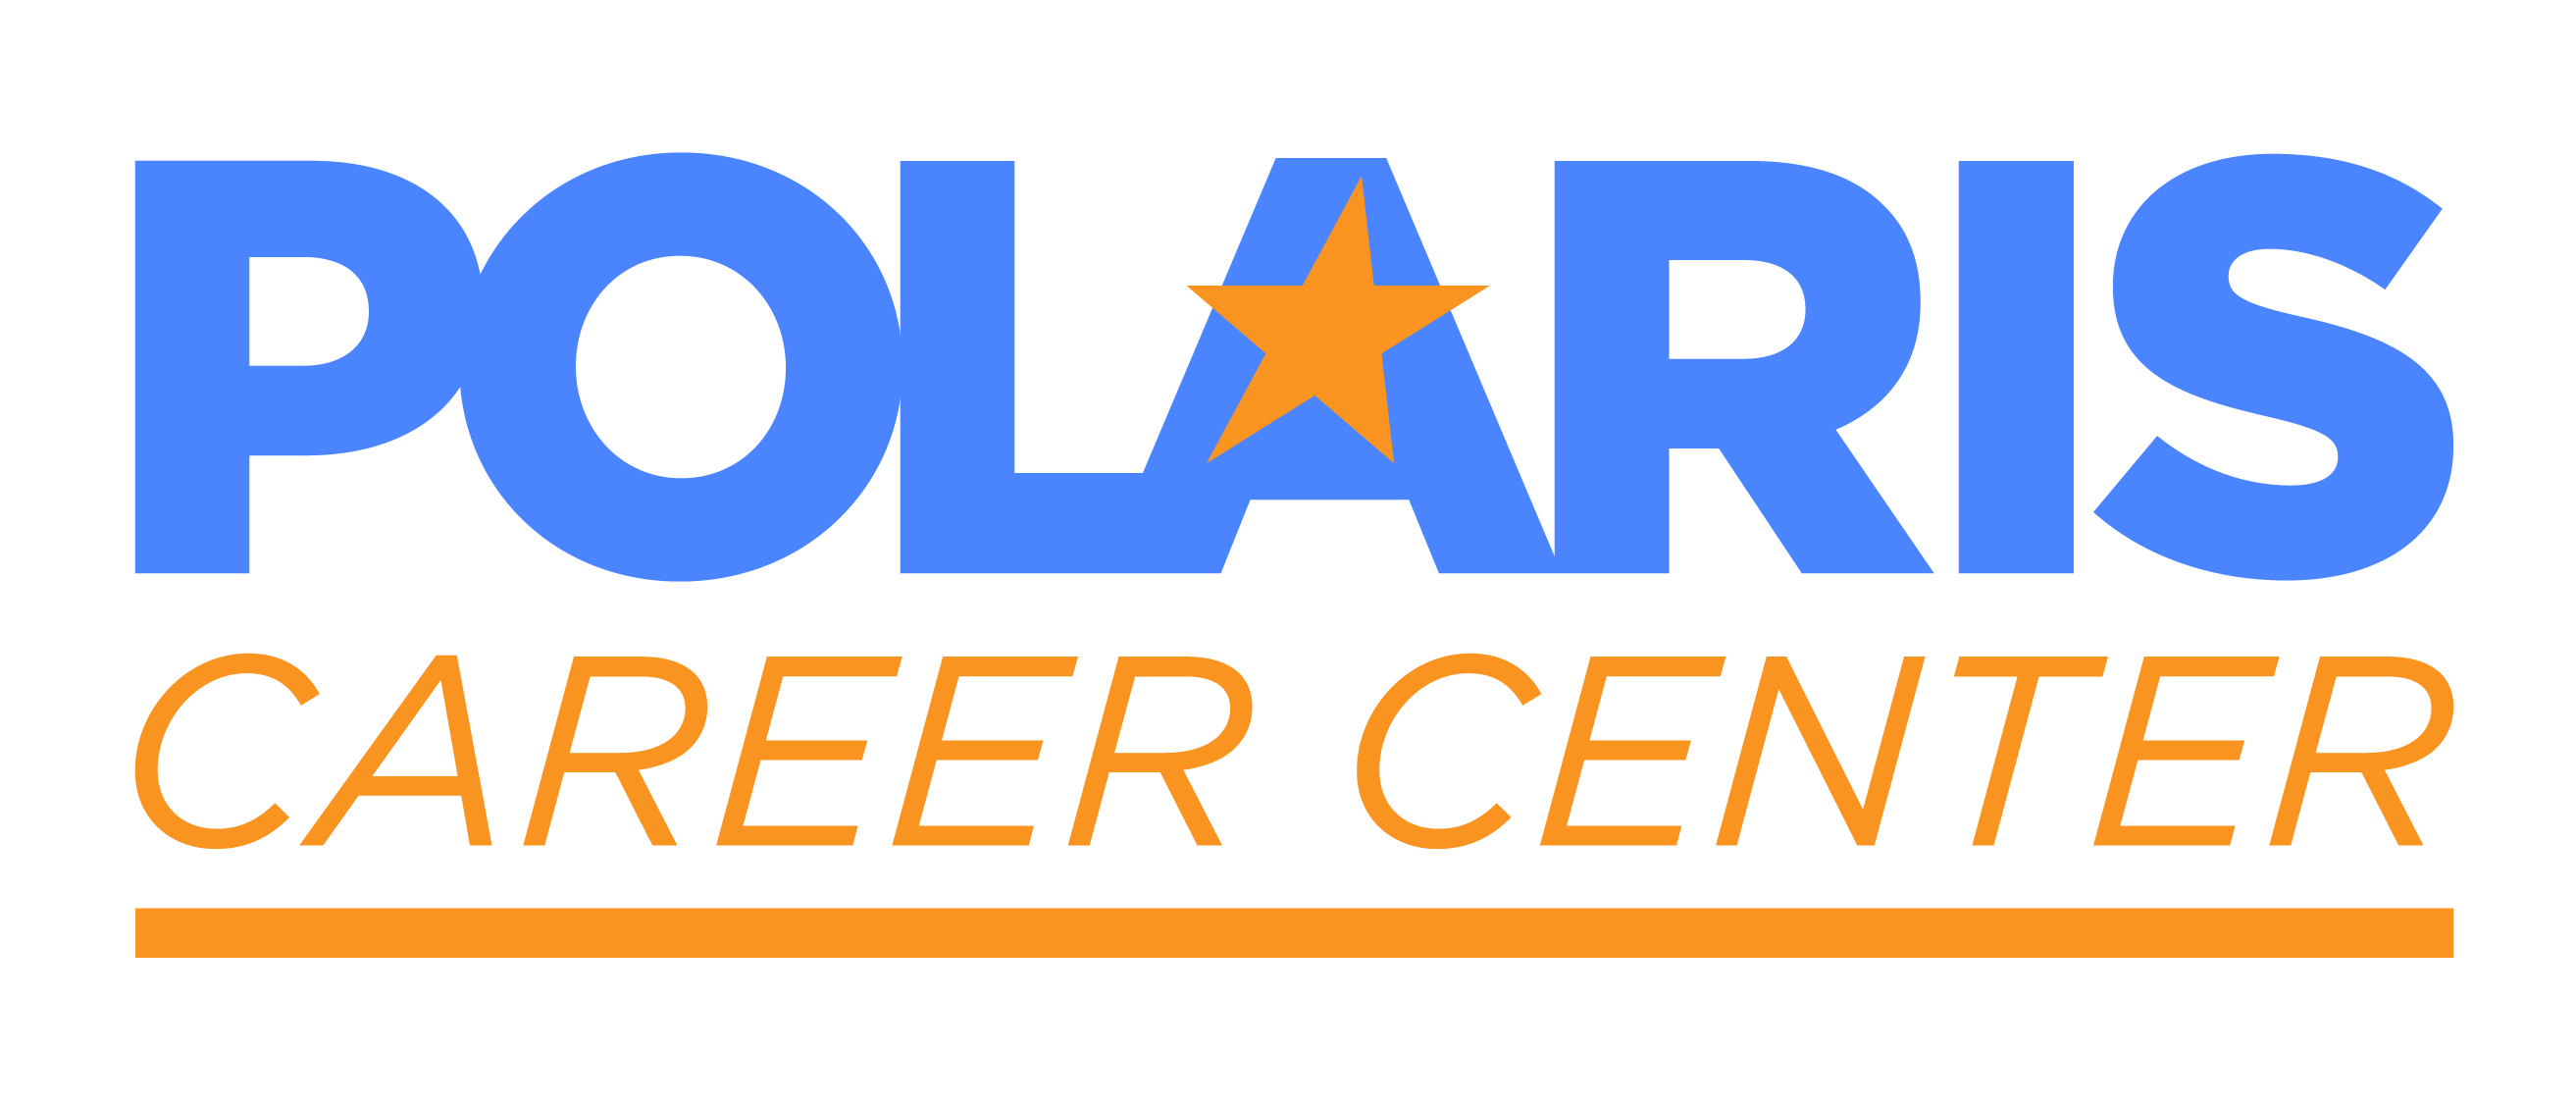 polaris career center logo colored on white background